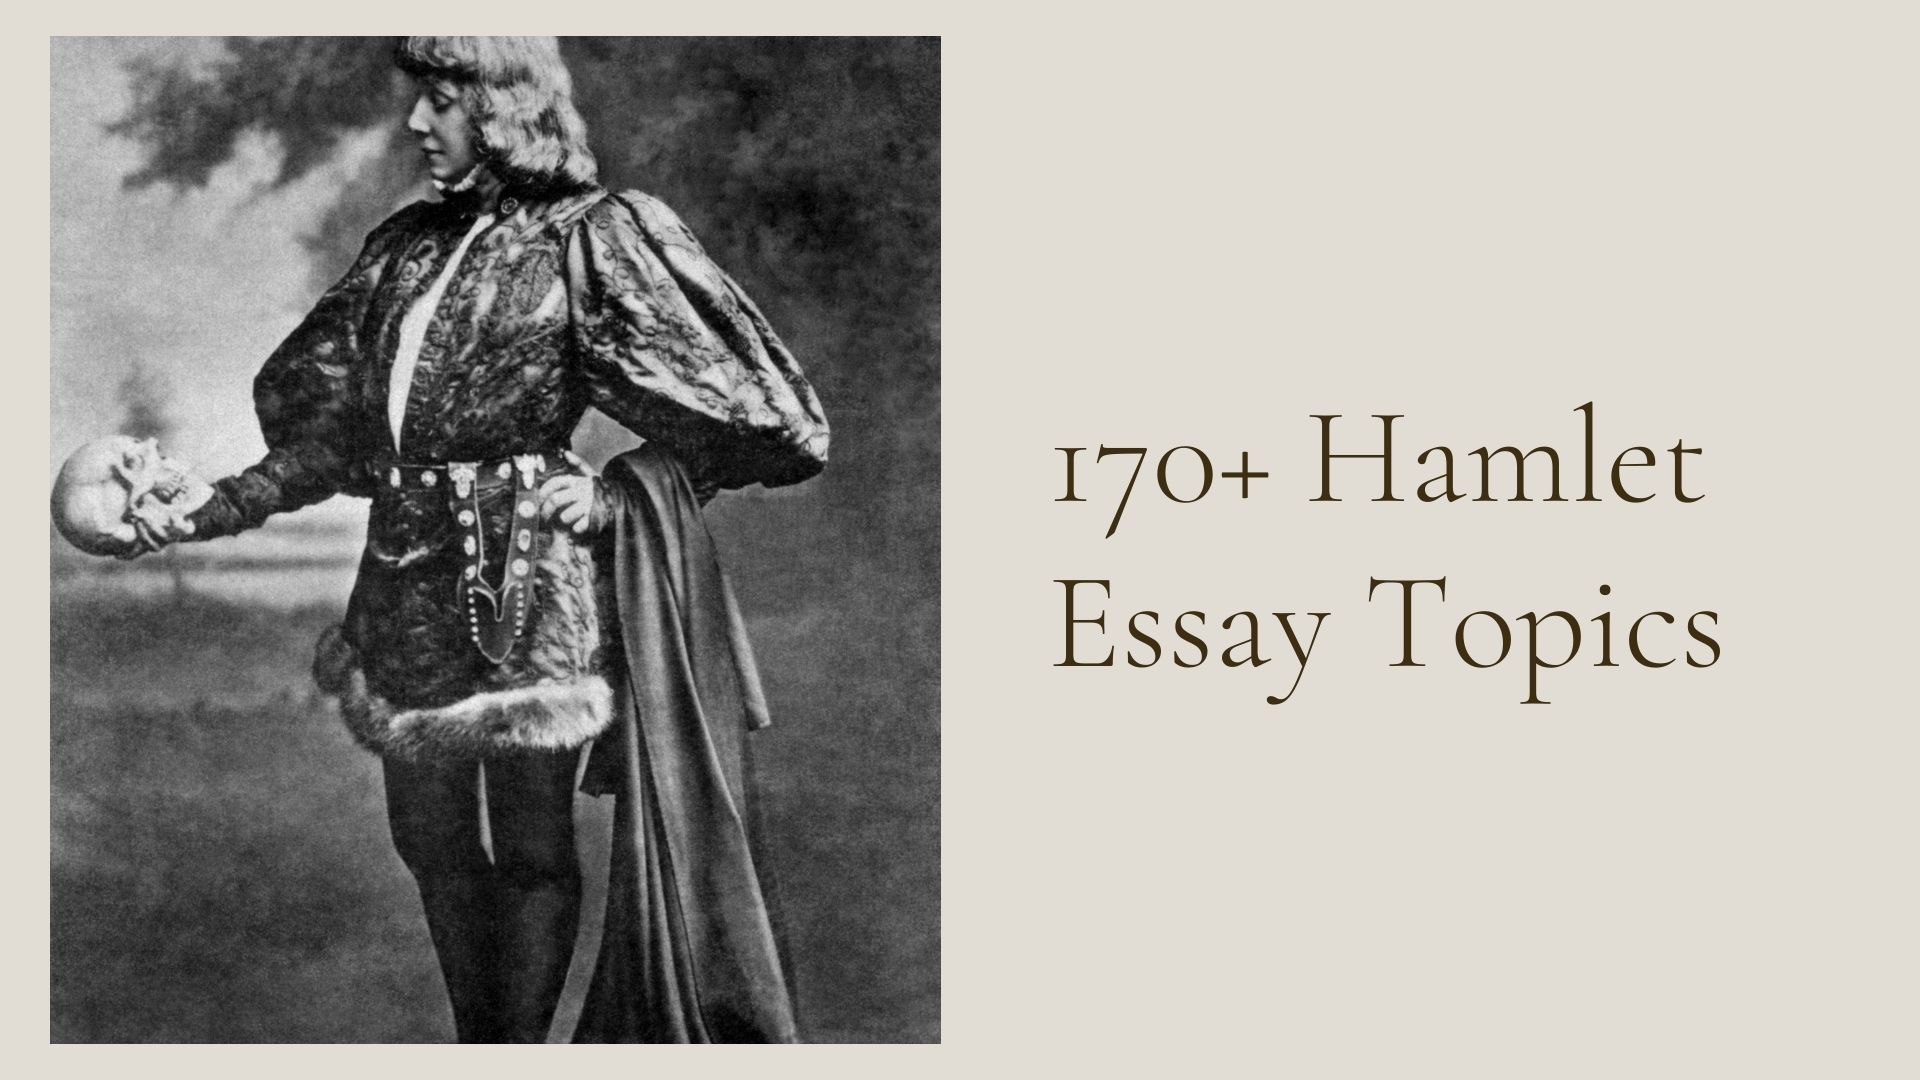 Hamlet essay topics